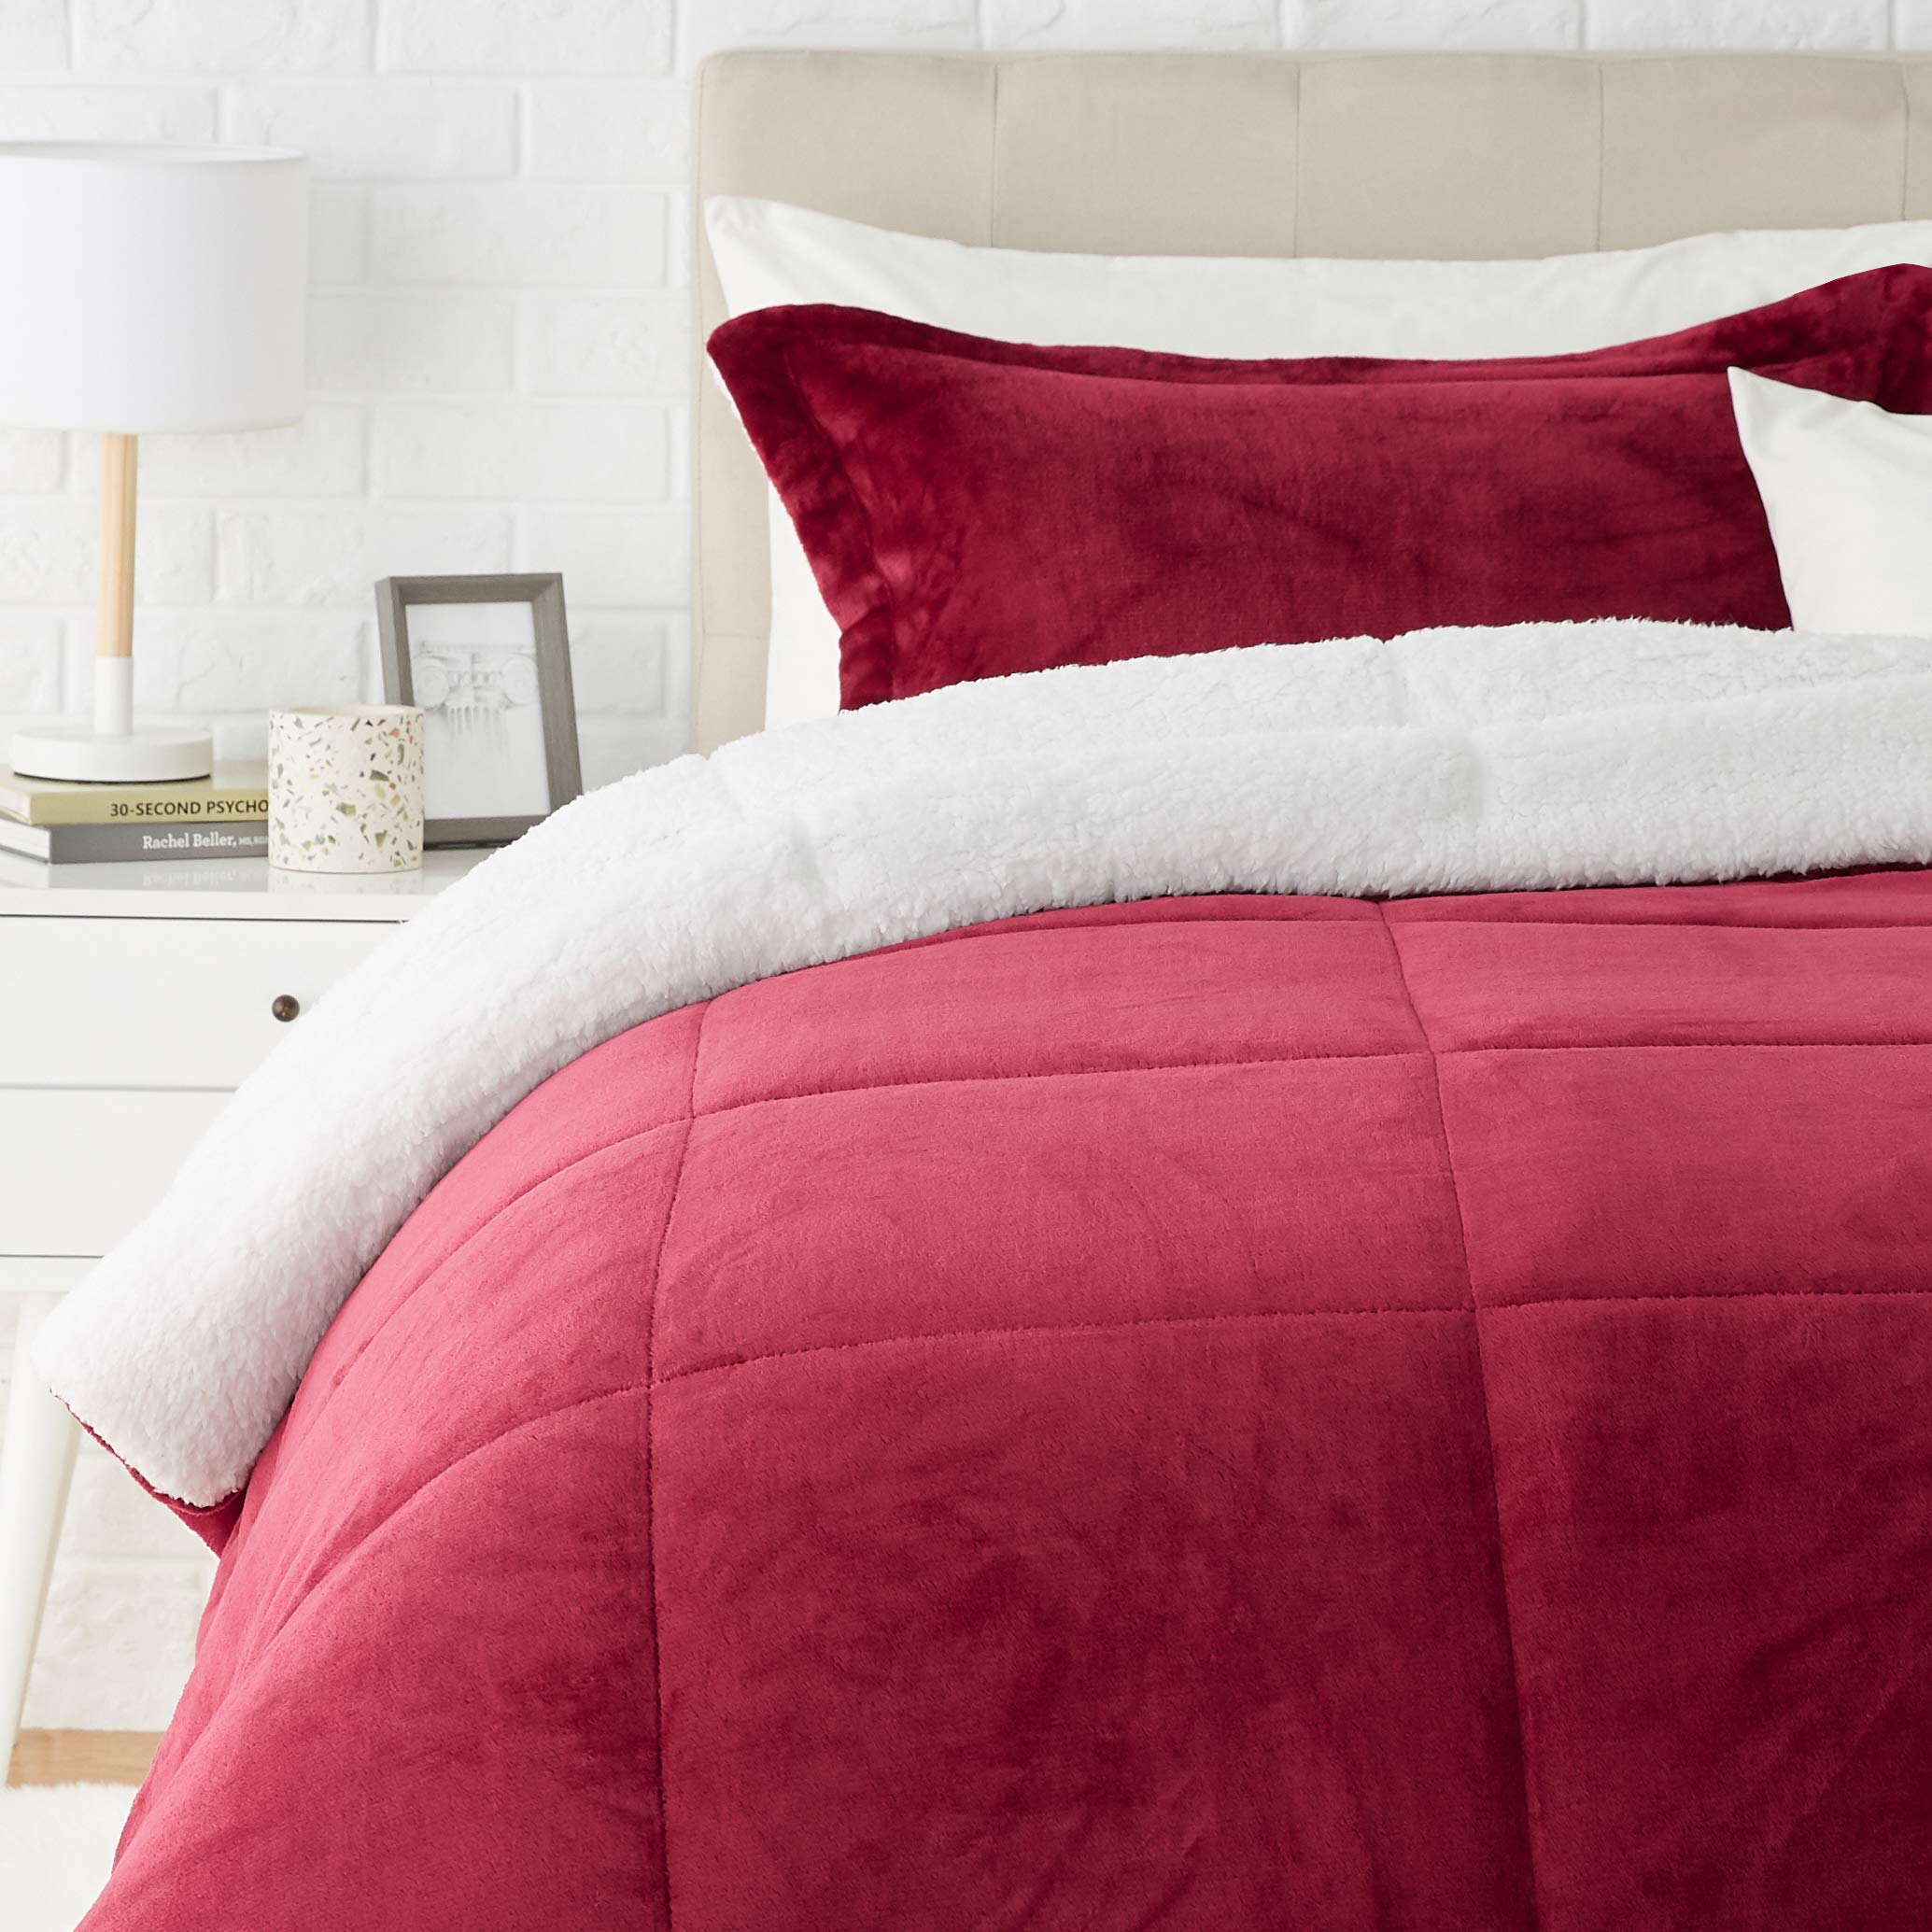 Amazon Basics Ultra-Soft Micromink Sherpa Comforter Bed Set - Burgundy, Twin